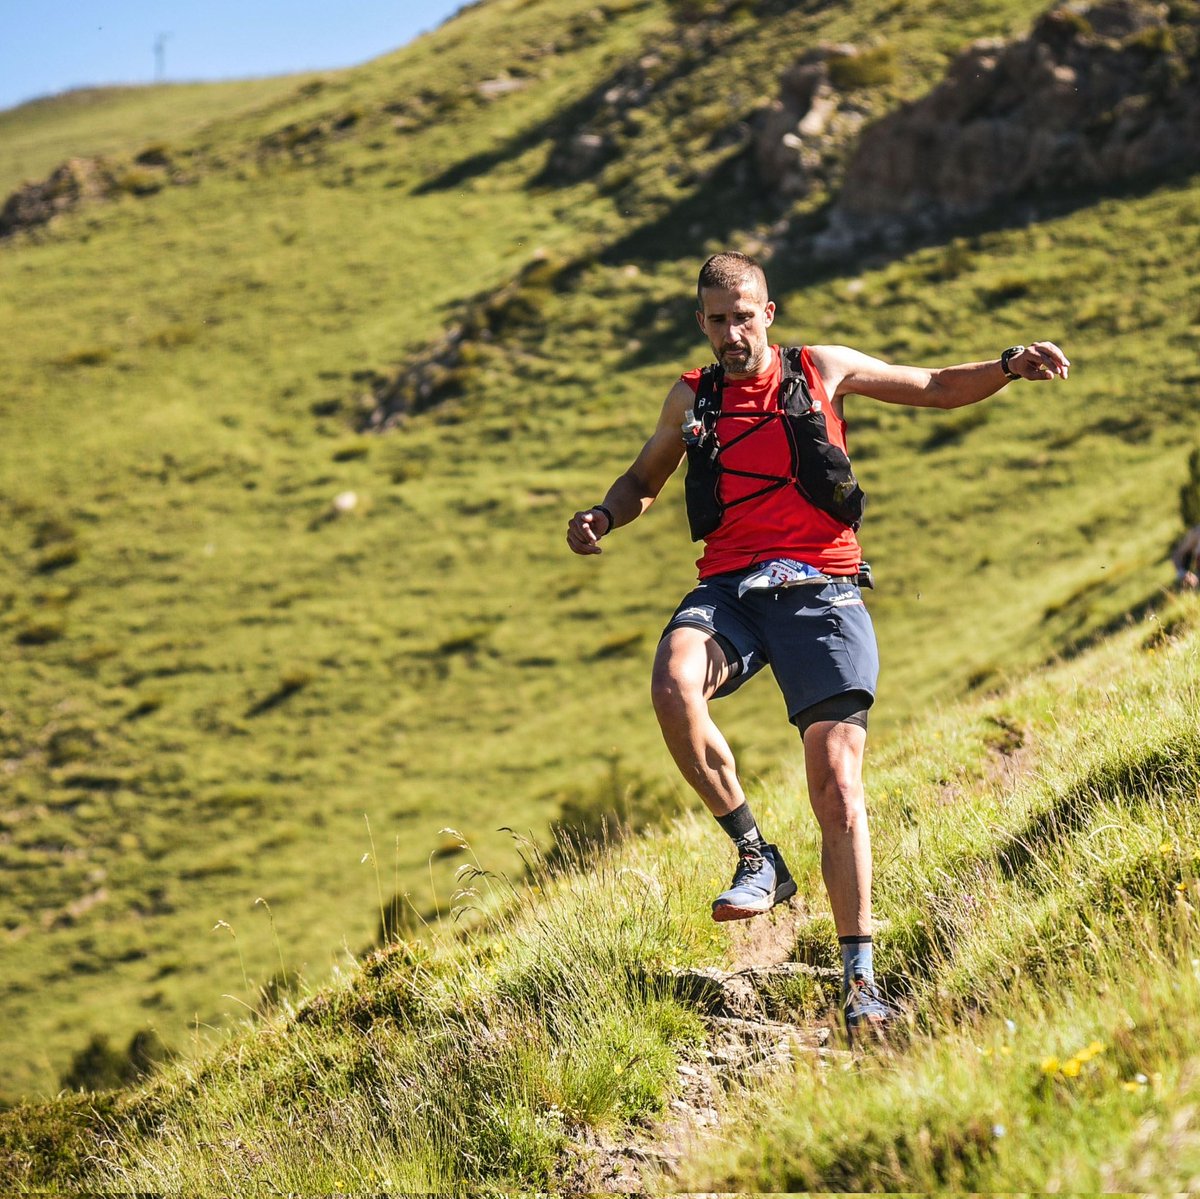 Trail 100 Andorra by UTMB 🇦🇩 @UTMBWorldSeries

𝗔𝗻𝘁𝗼𝗻𝗶𝗼 𝗝𝗮é𝗻 - 𝗨𝗹𝘁𝗿𝗮𝗧𝗿𝗮𝗶𝗹 
ℎ𝑡𝑡𝑝𝑠:/𝑎𝑛𝑡𝑜𝑛𝑖𝑜𝑗𝑎𝑒𝑛𝑢𝑙𝑡𝑟𝑎𝑡𝑟𝑎𝑖𝑙.𝑏𝑙𝑜𝑔𝑠𝑝𝑜𝑡.𝑐𝑜𝑚

🏃@cimalp @cimalpofficial 
🍫 @HSNstore 👟 @atomsport_es